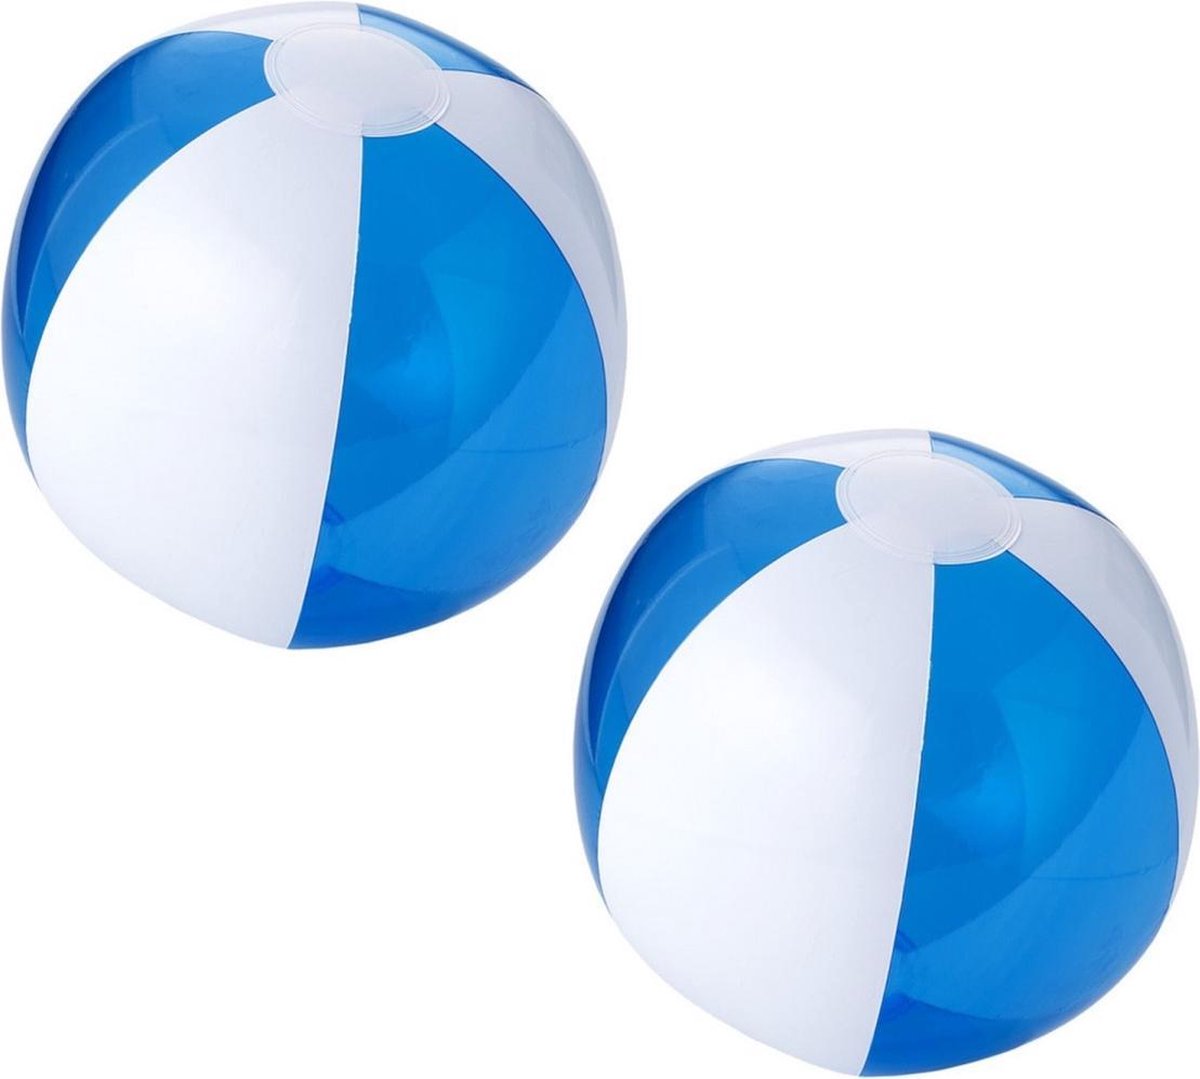 2x stuks opblaasbare strandballen blauw/wit 30 cm - Buitenspeelgoed waterspeelgoed opblaasbaar